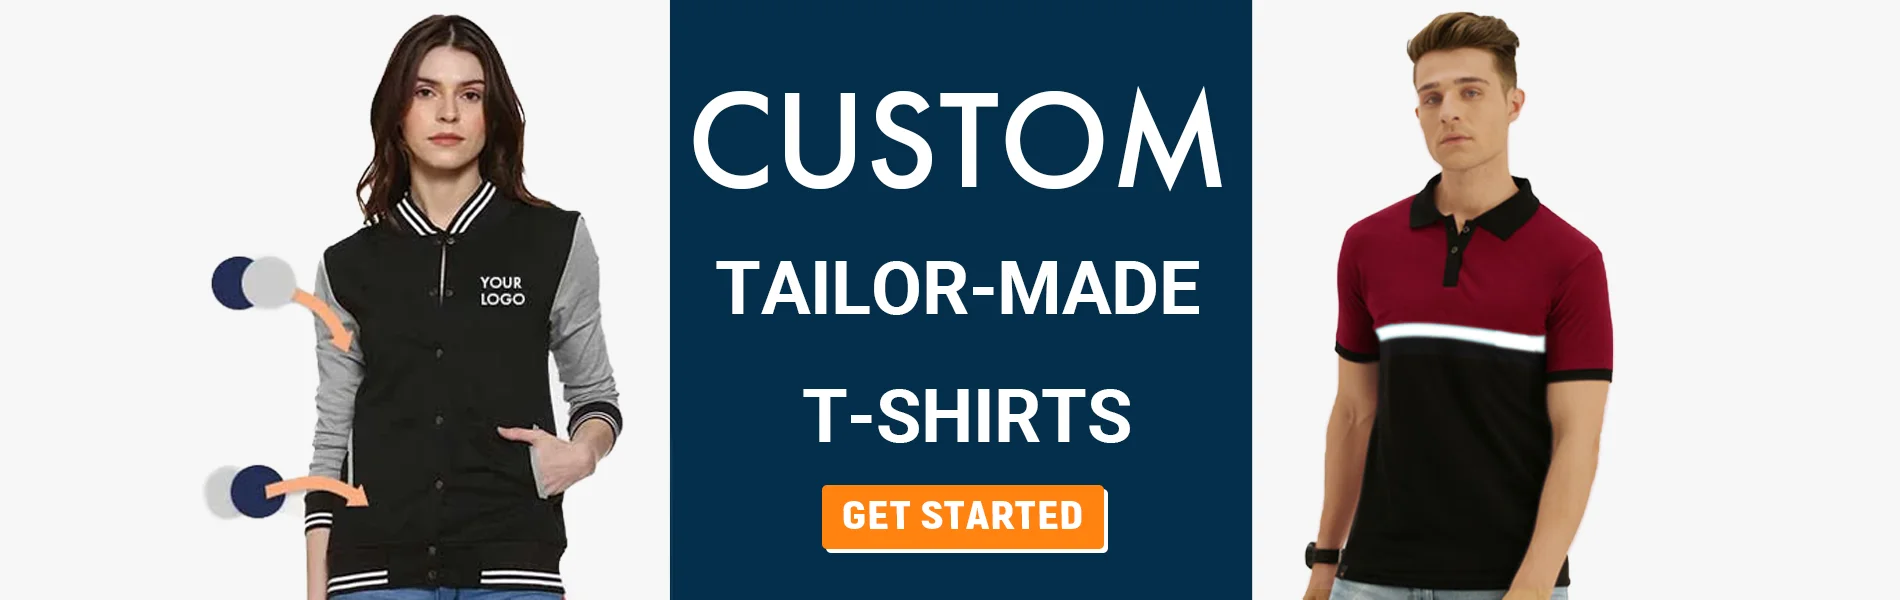 custom tailormade t-shirts bombay